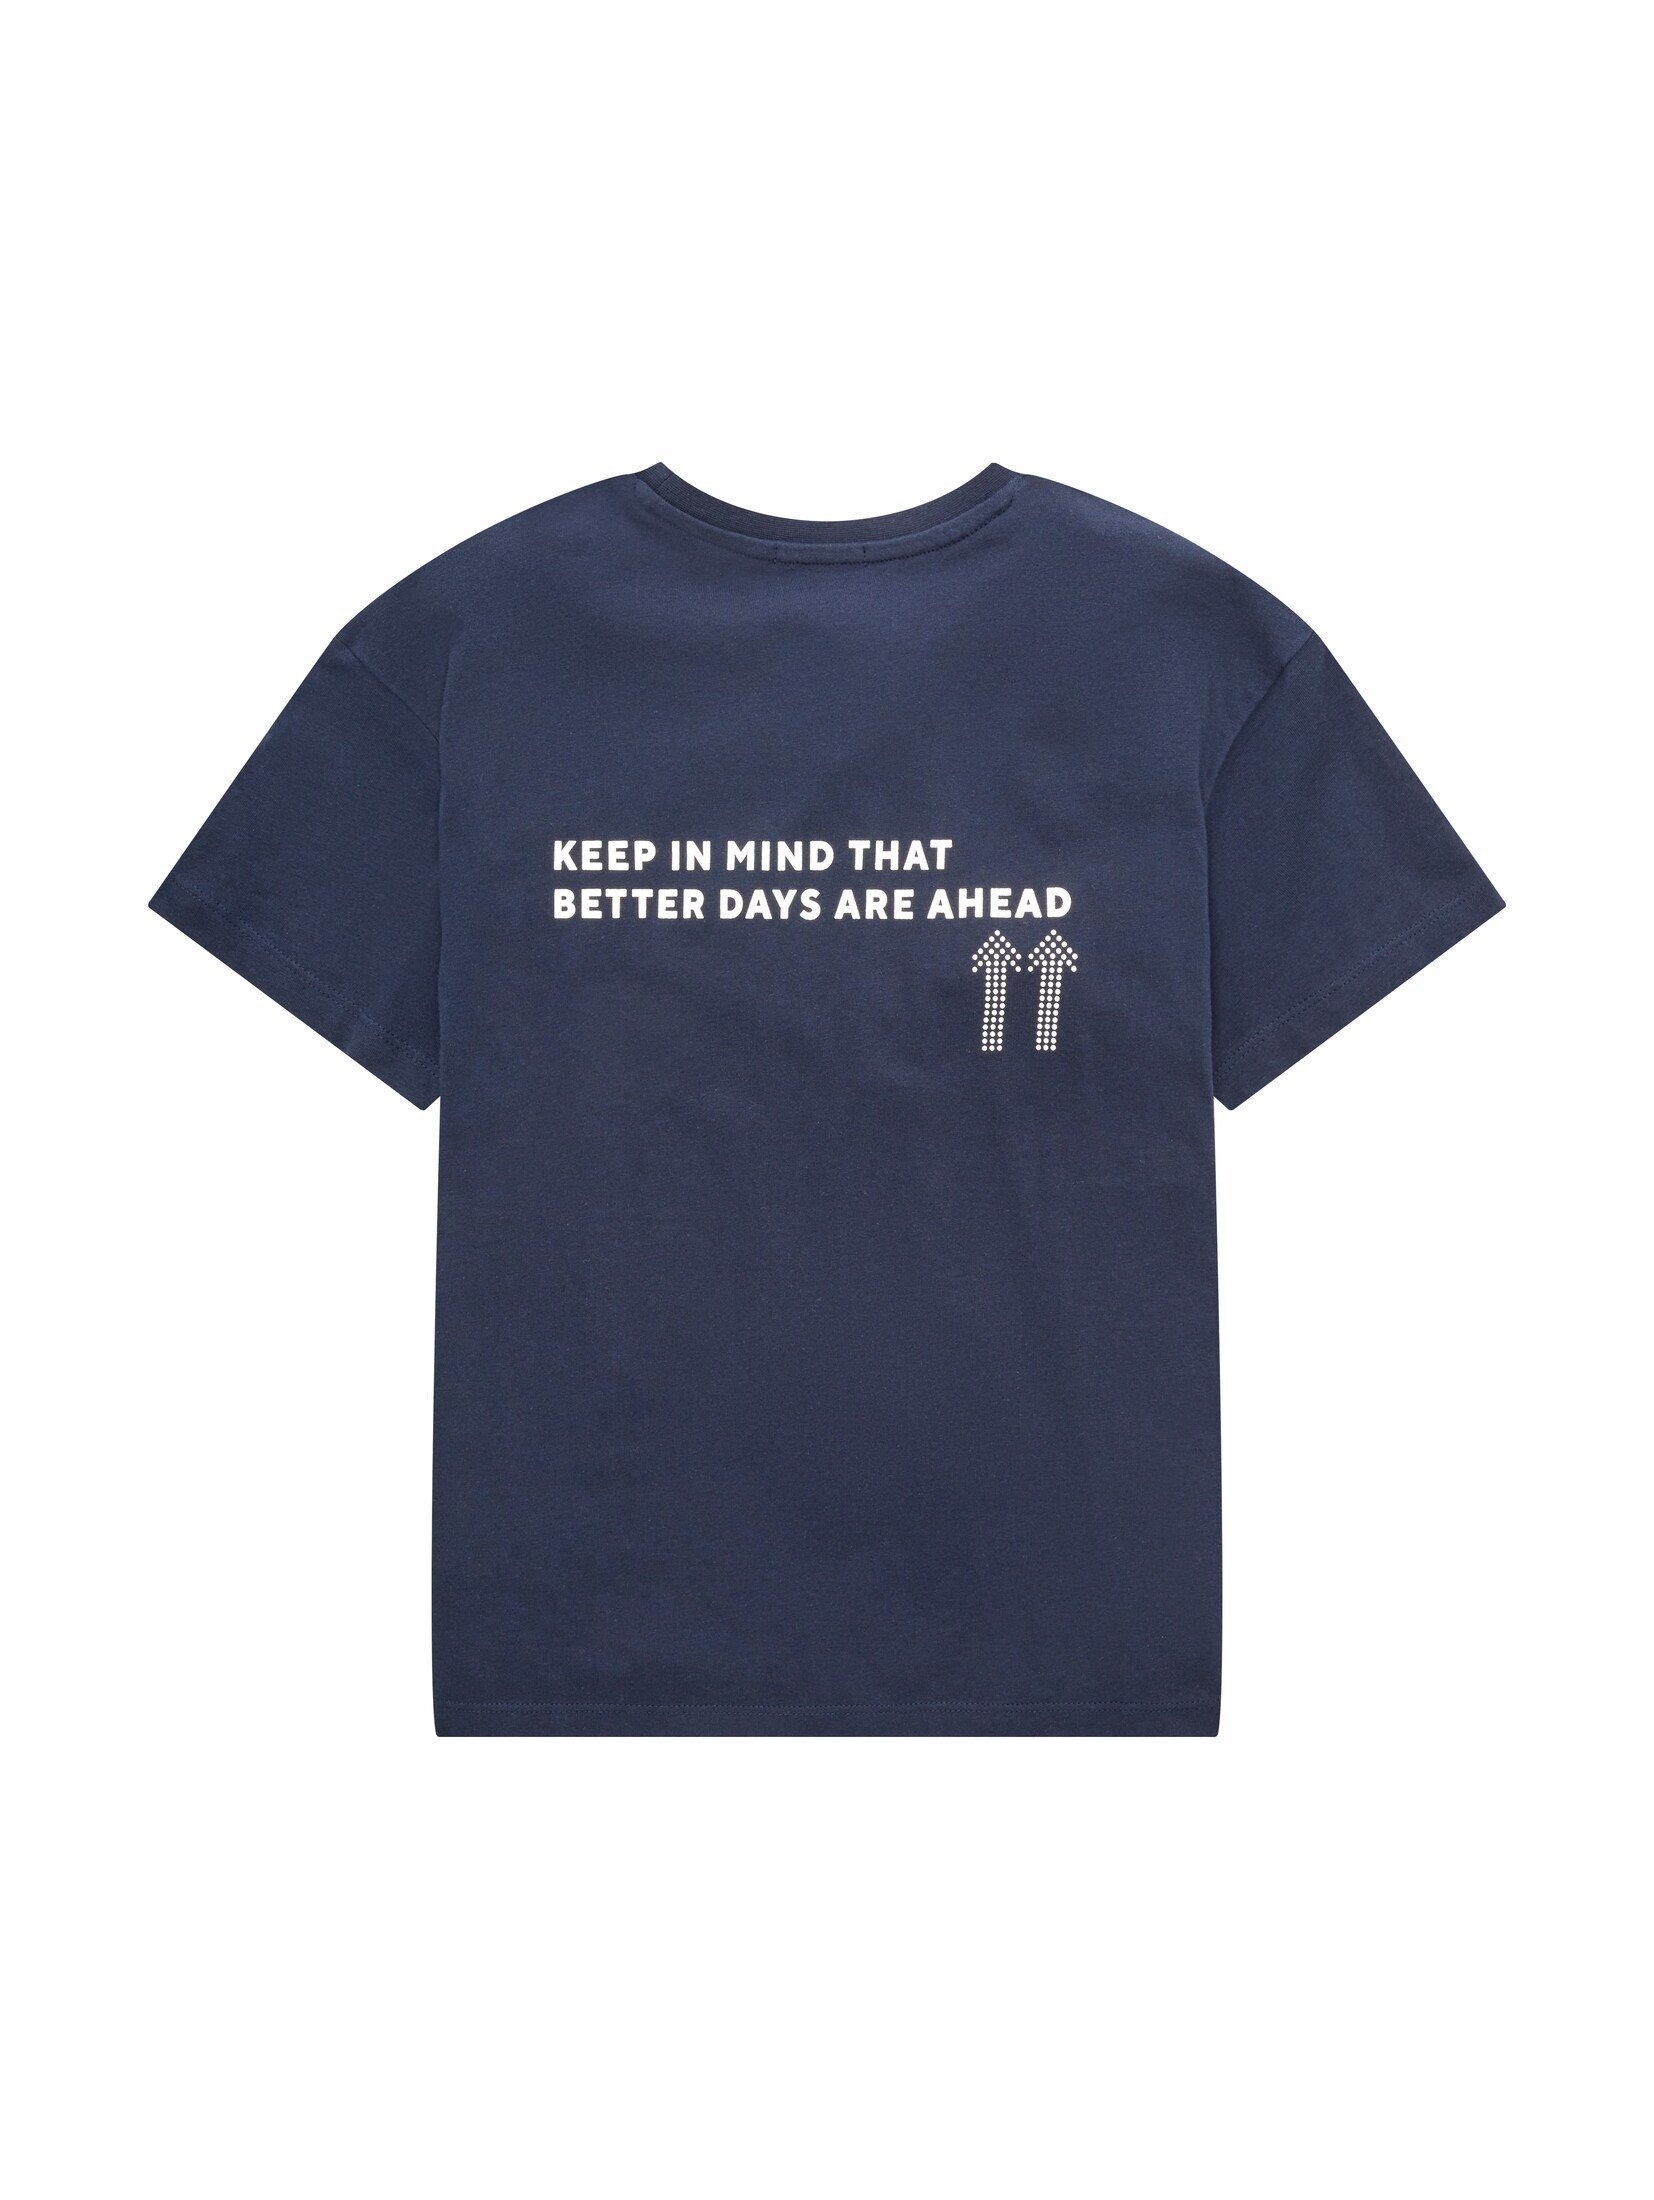 mit T-Shirt blue sky Textprint T-Shirt TAILOR TOM captain